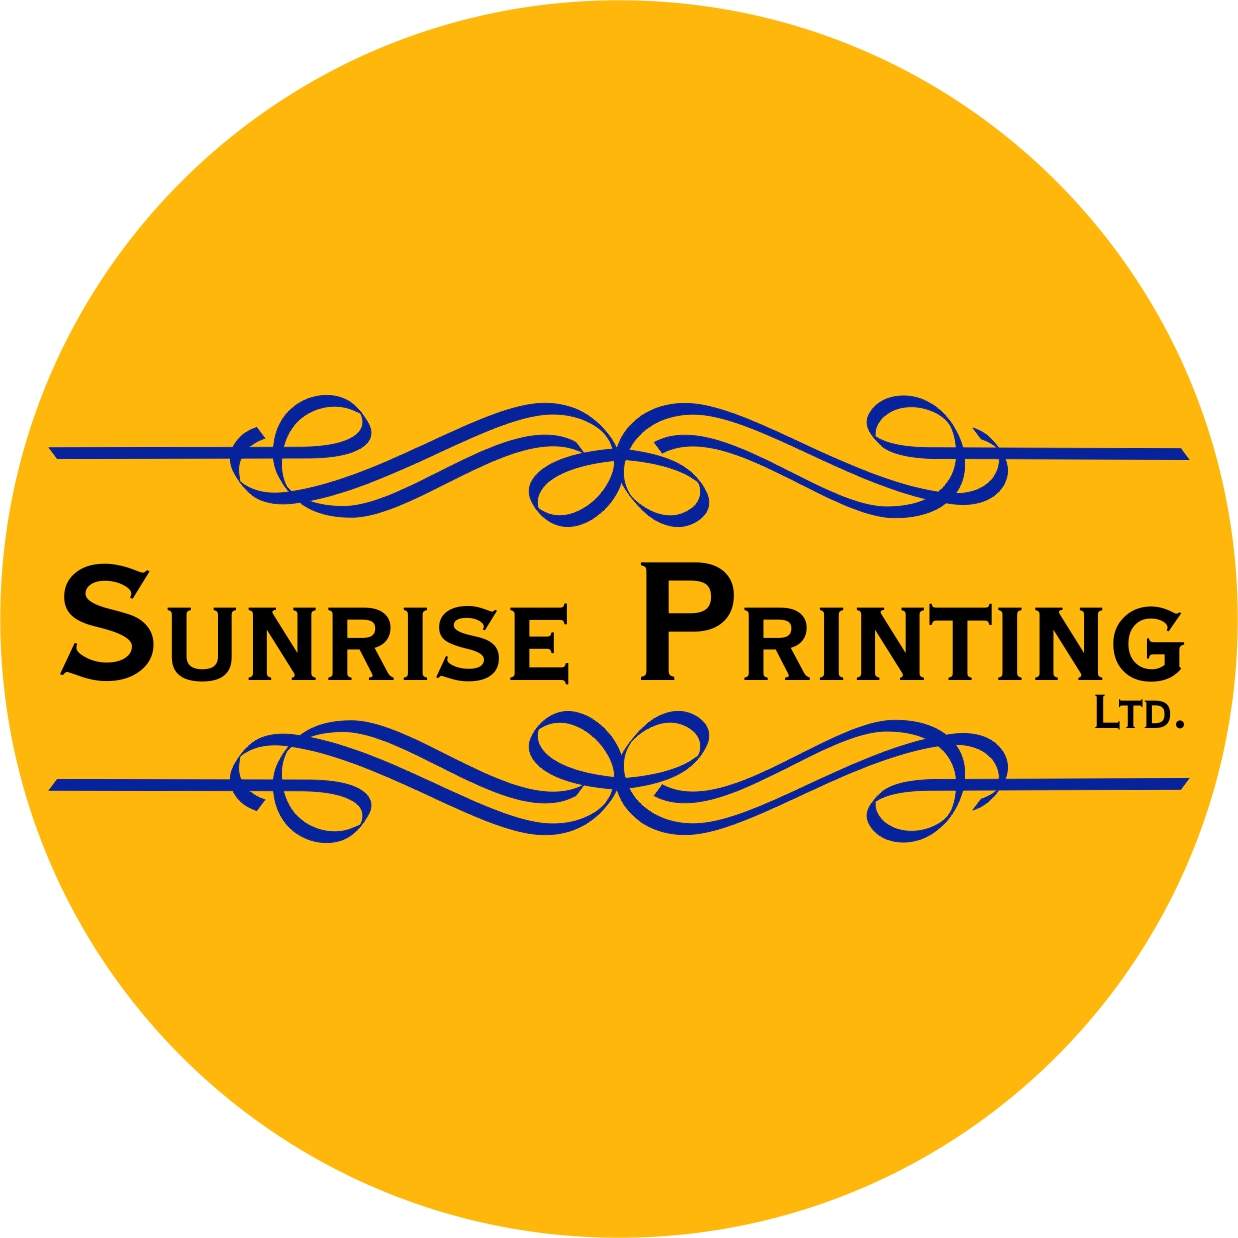 Sunrise Printing